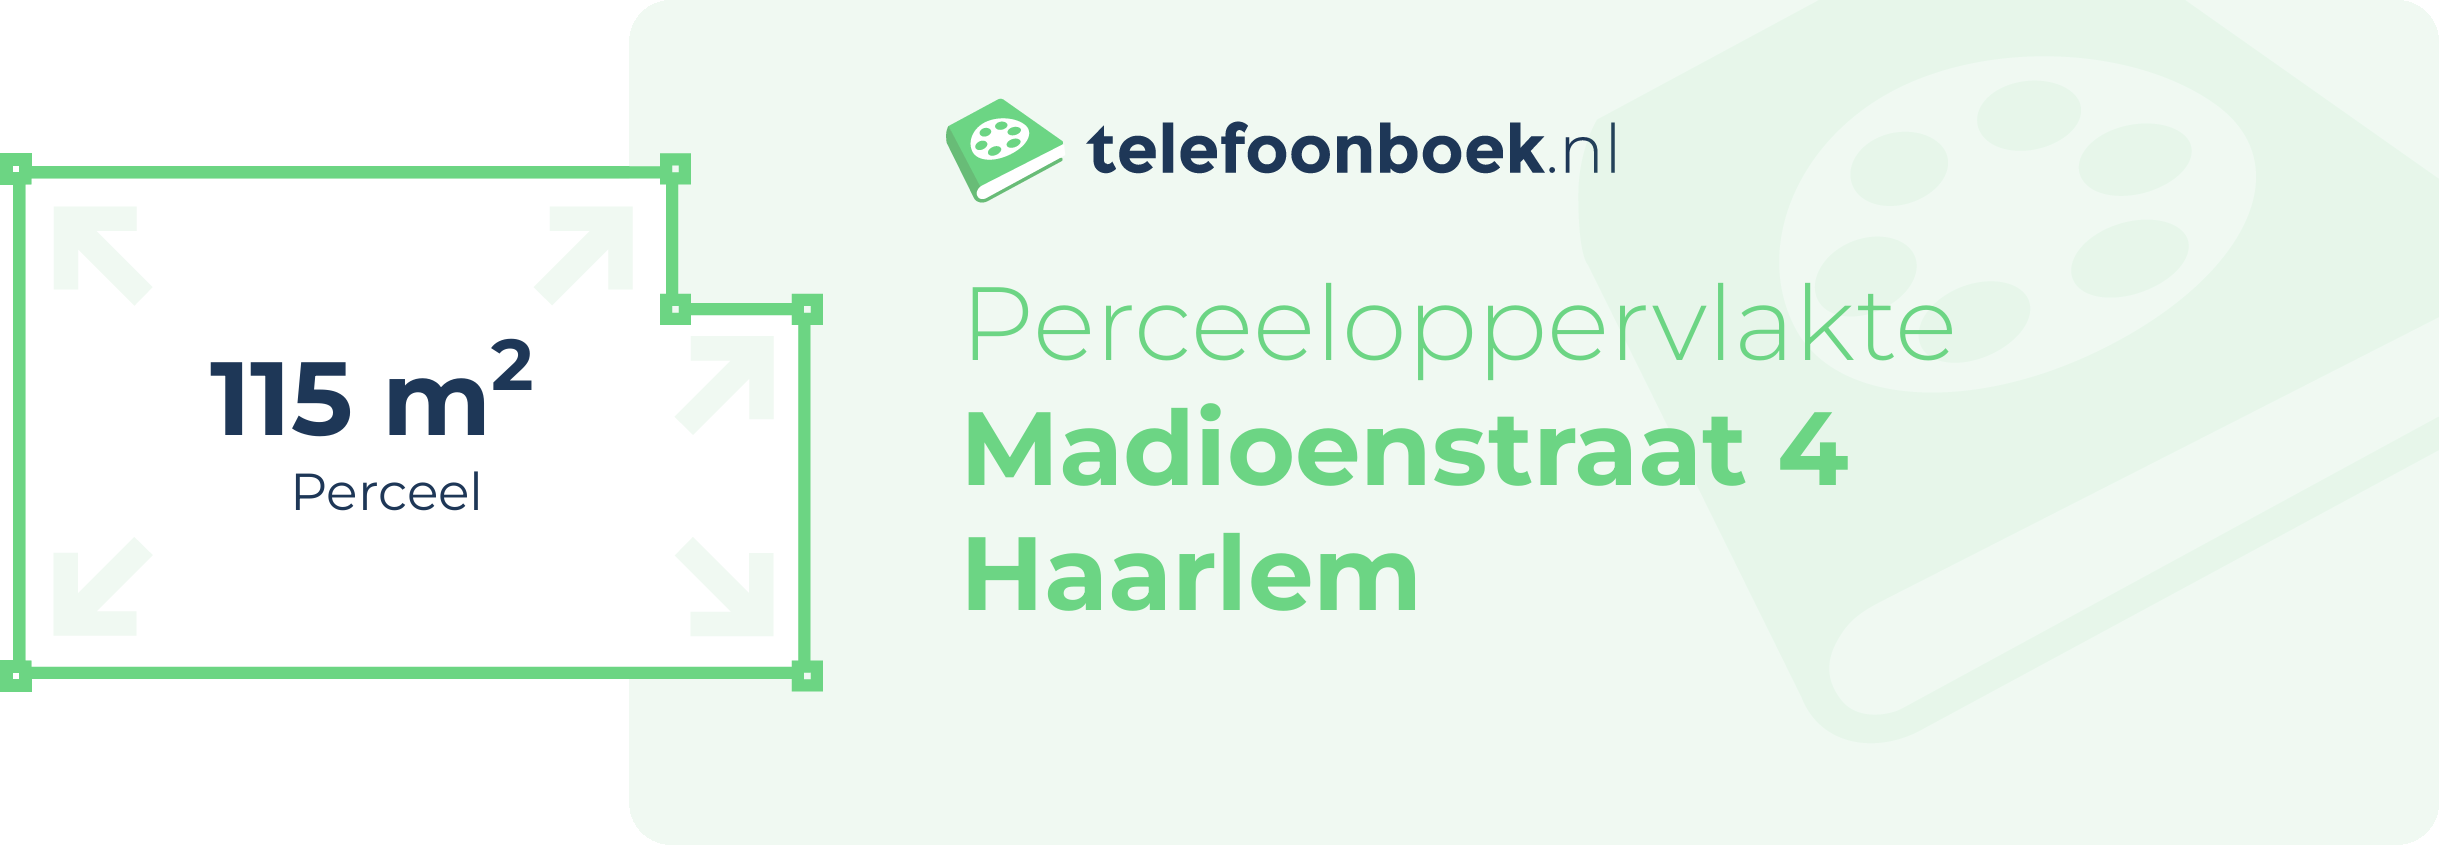 Perceeloppervlakte Madioenstraat 4 Haarlem